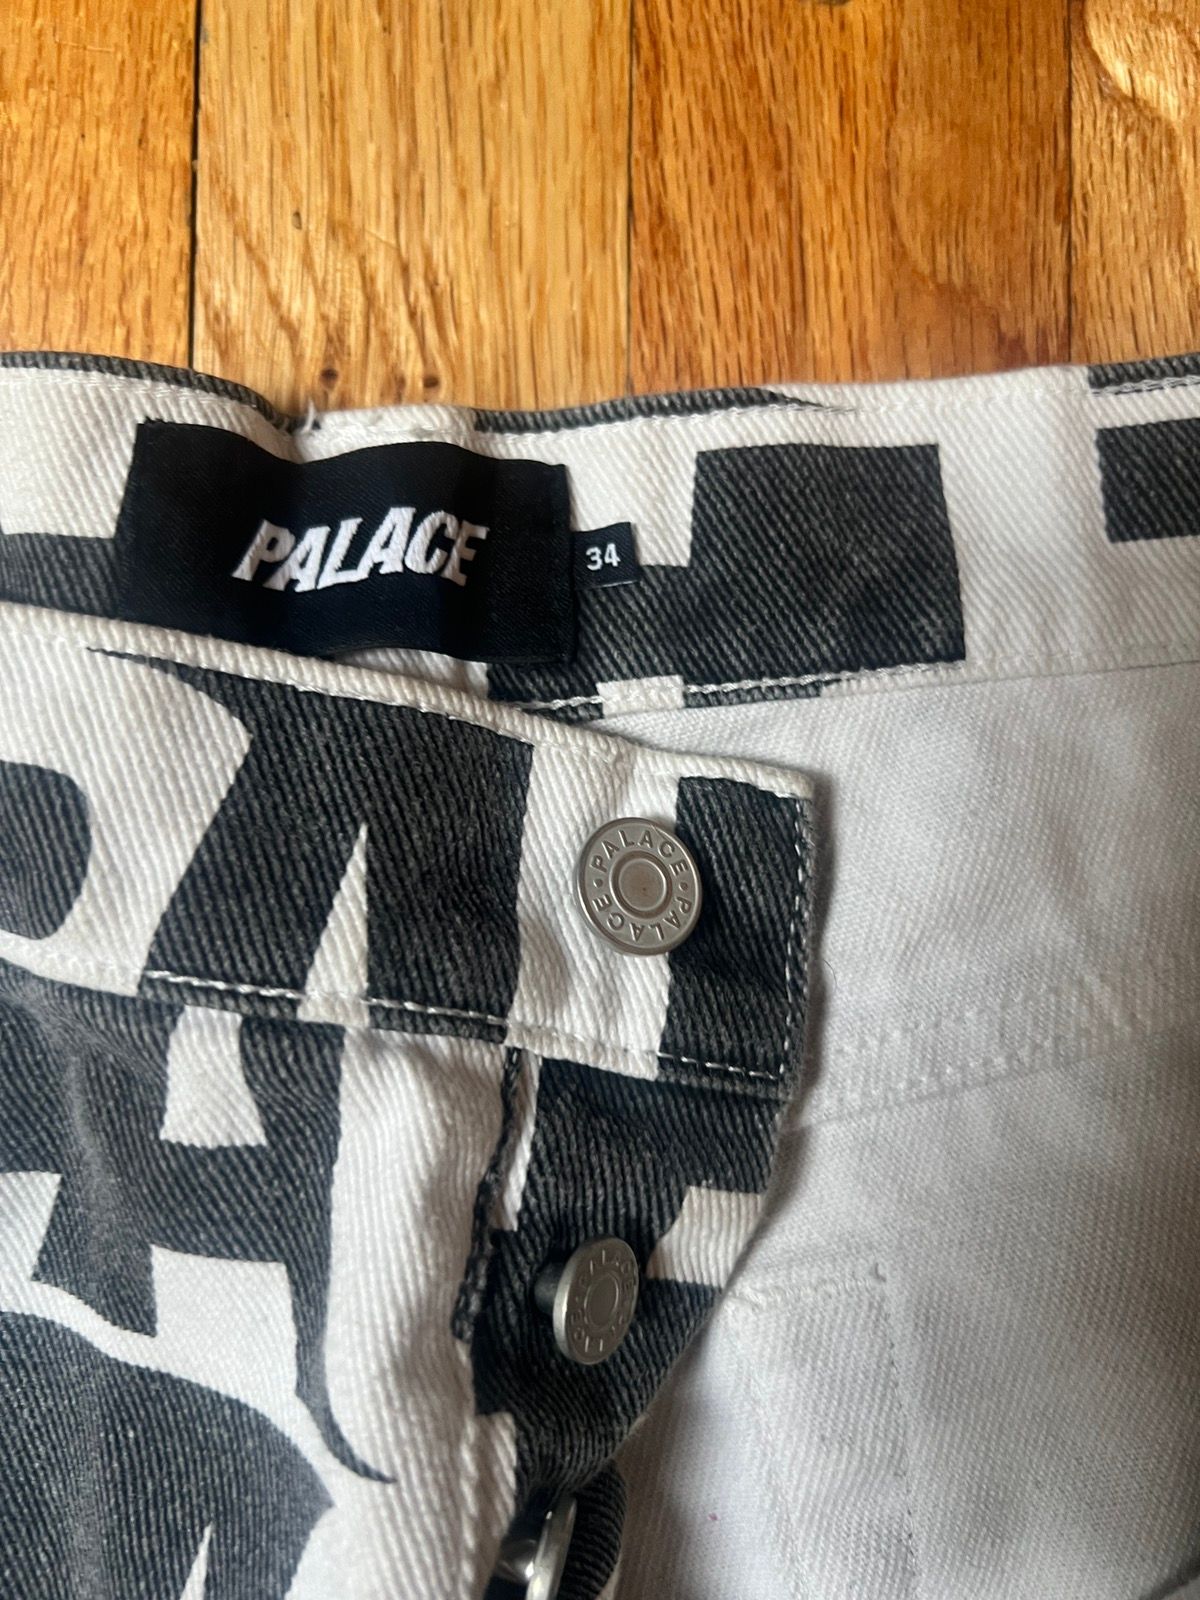 Palace Palace Repeater Denim Jeans Size US 34 / EU 50 - 3 Thumbnail